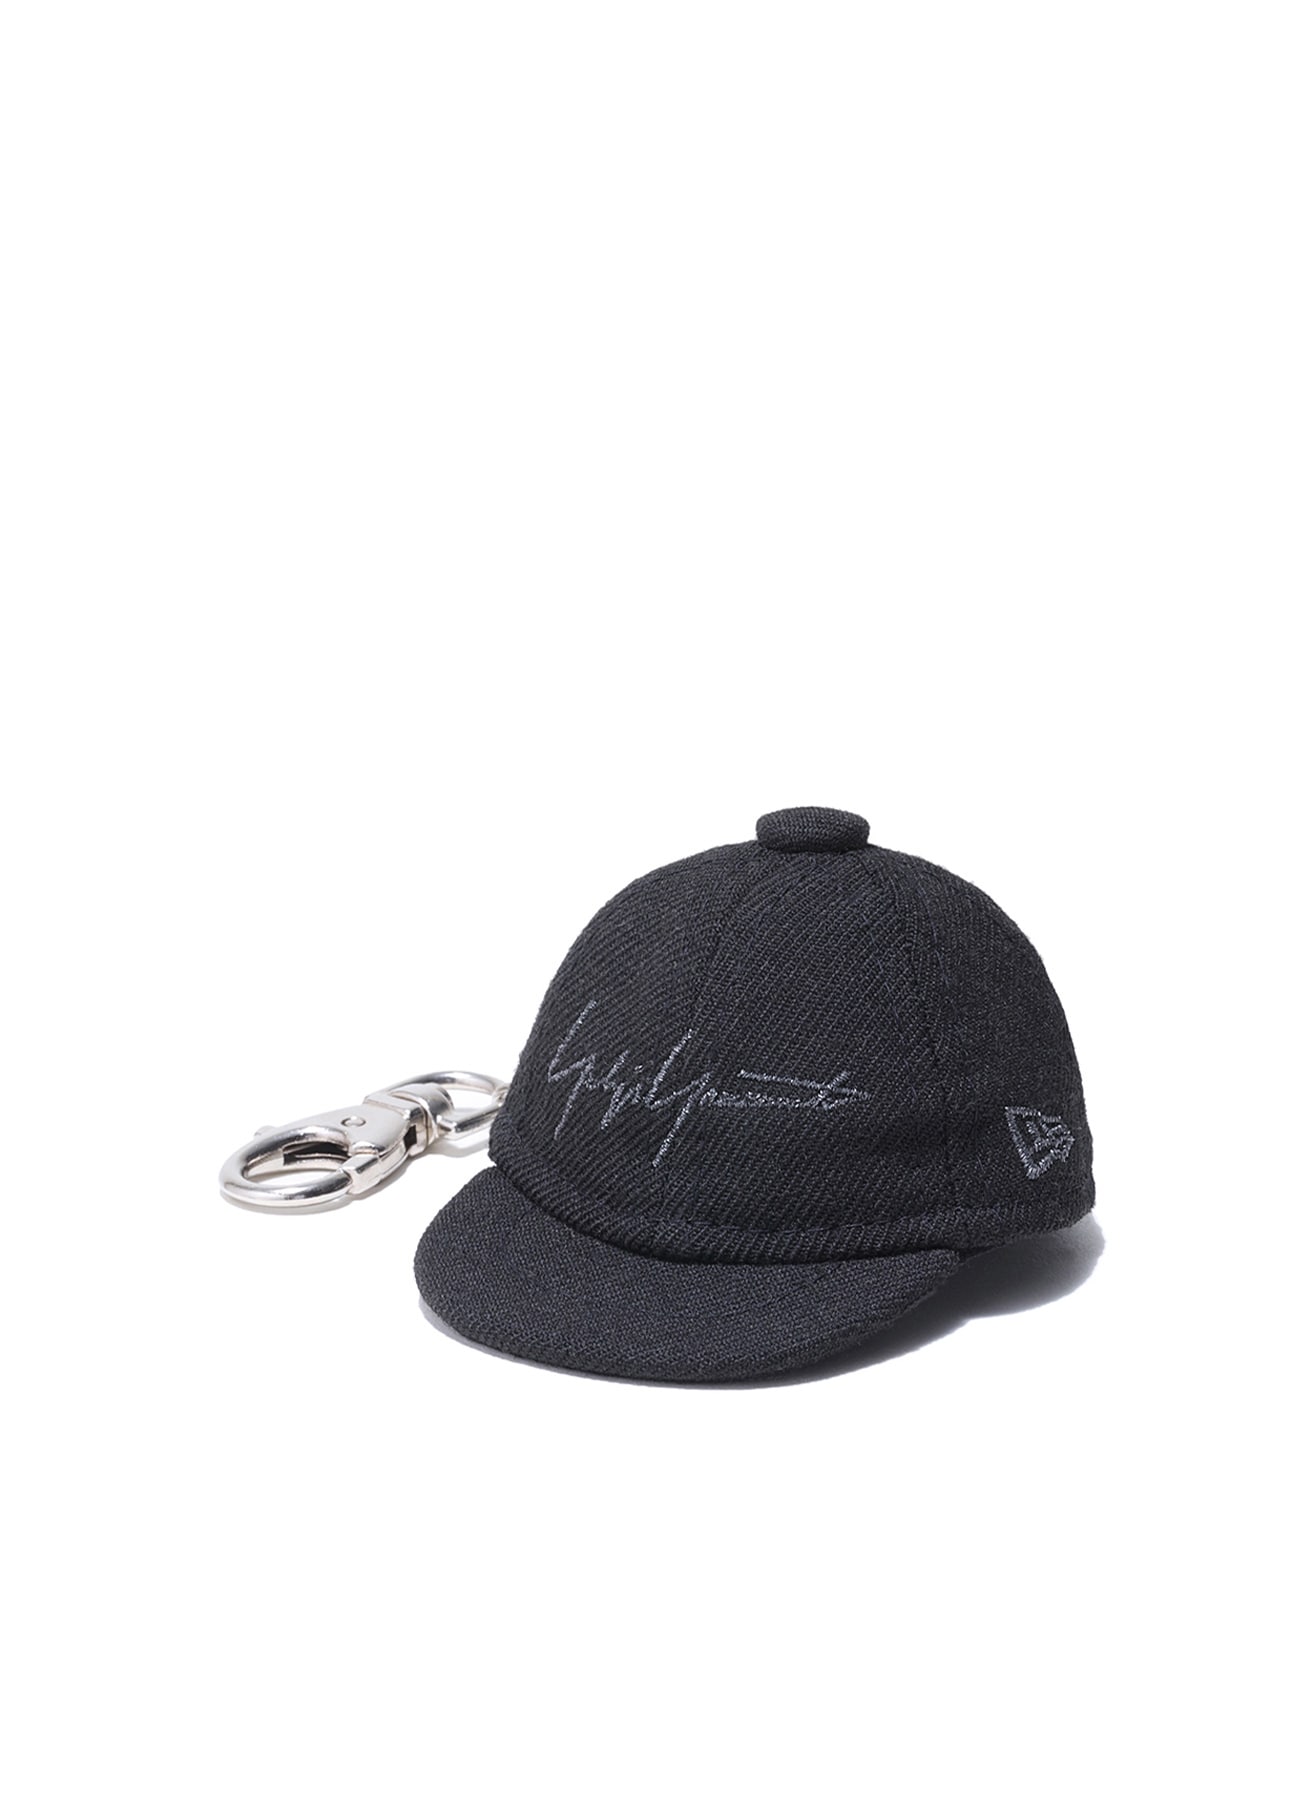 Yohji Yamamoto × New Era METALLIC BLACK SIGNATURE CAP KEY HOLDER